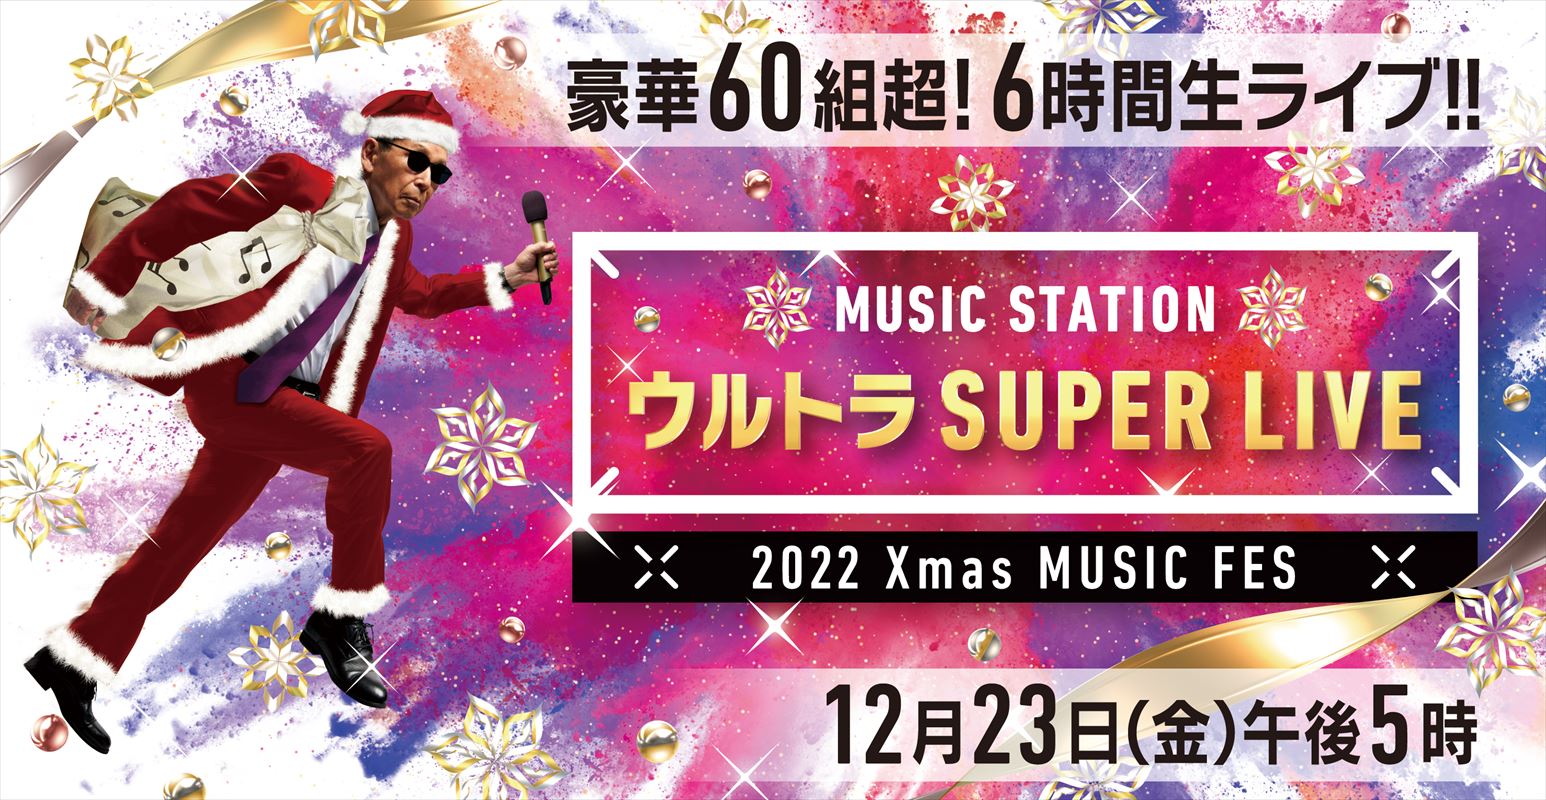 『Mステ ウルトラSUPER LIVE 2022』出演者第3弾